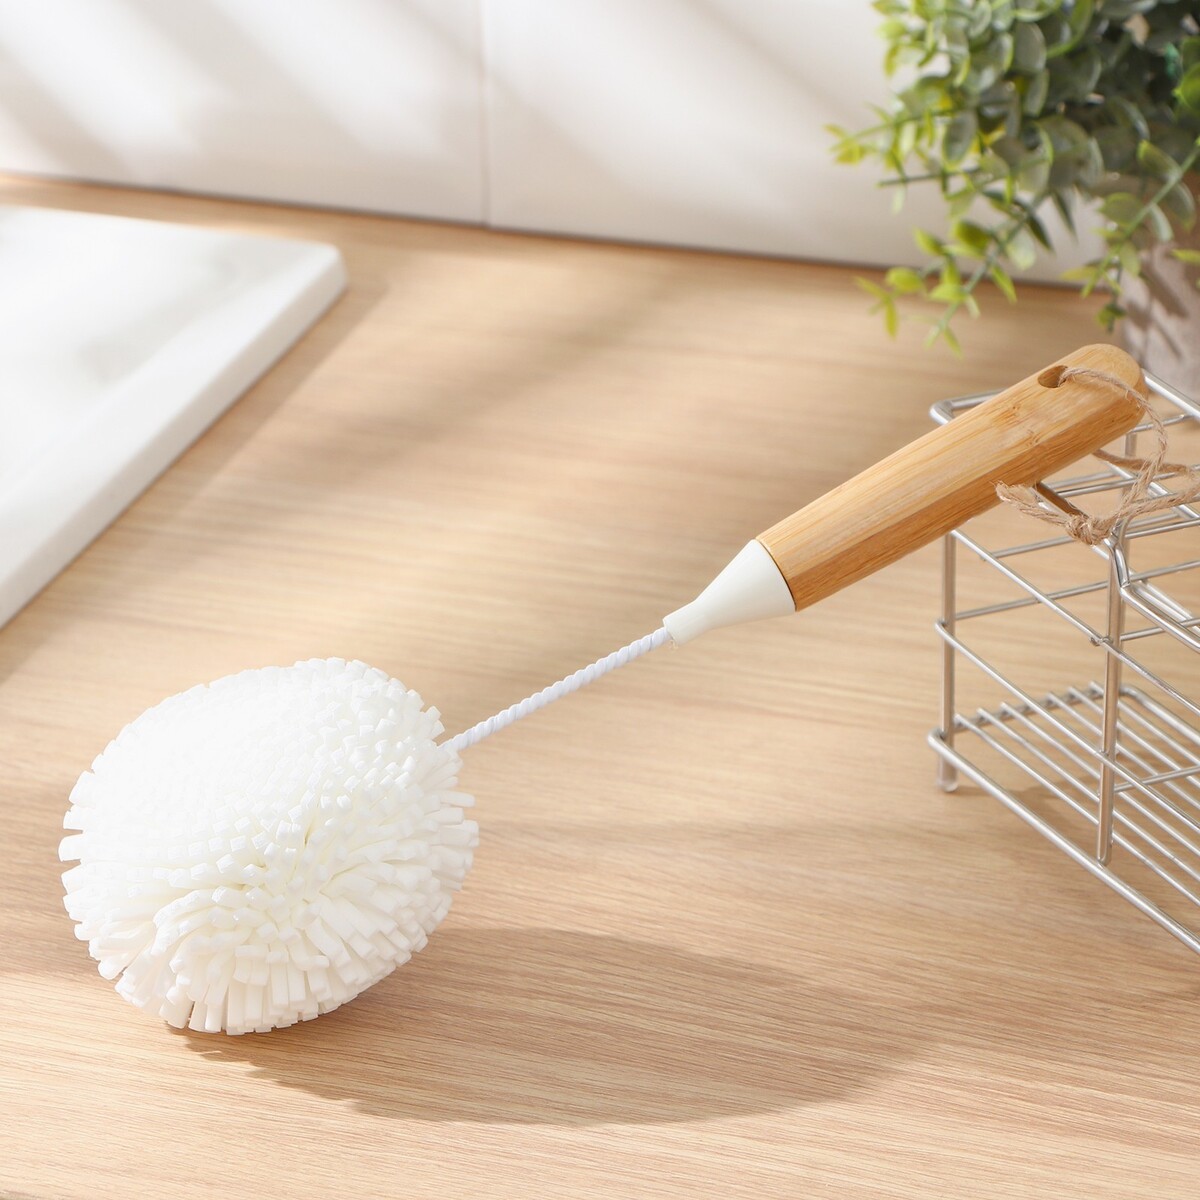 Ёрш для посуды доляна meli, бамбуковая ручка, eva, шар, 26×10 см ёрш для посуды доляна meli 34×6 см бамбуковая ручка замшевая петелька